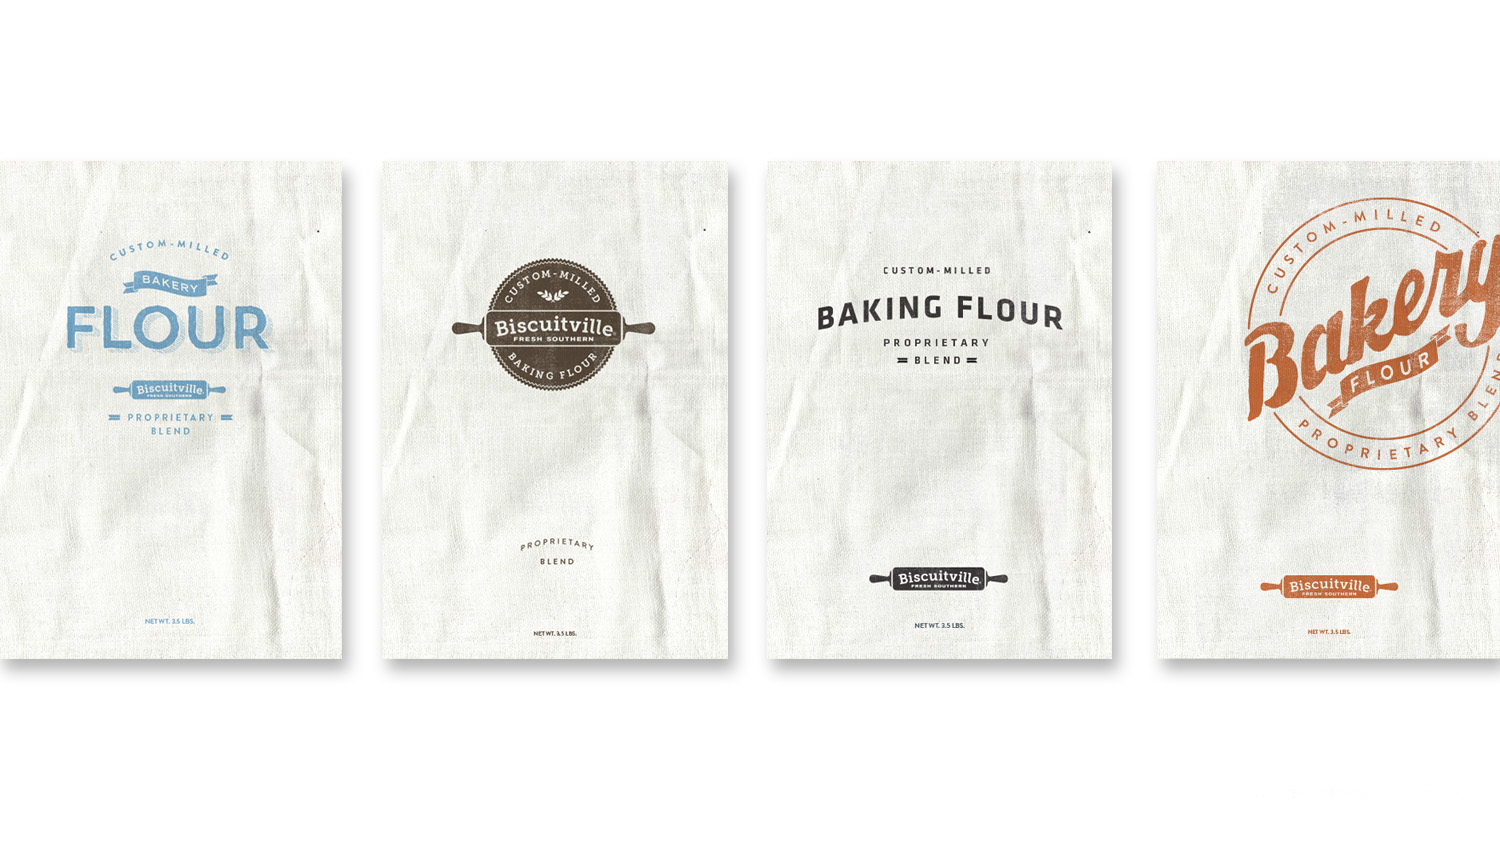 Flour sacks.jpg